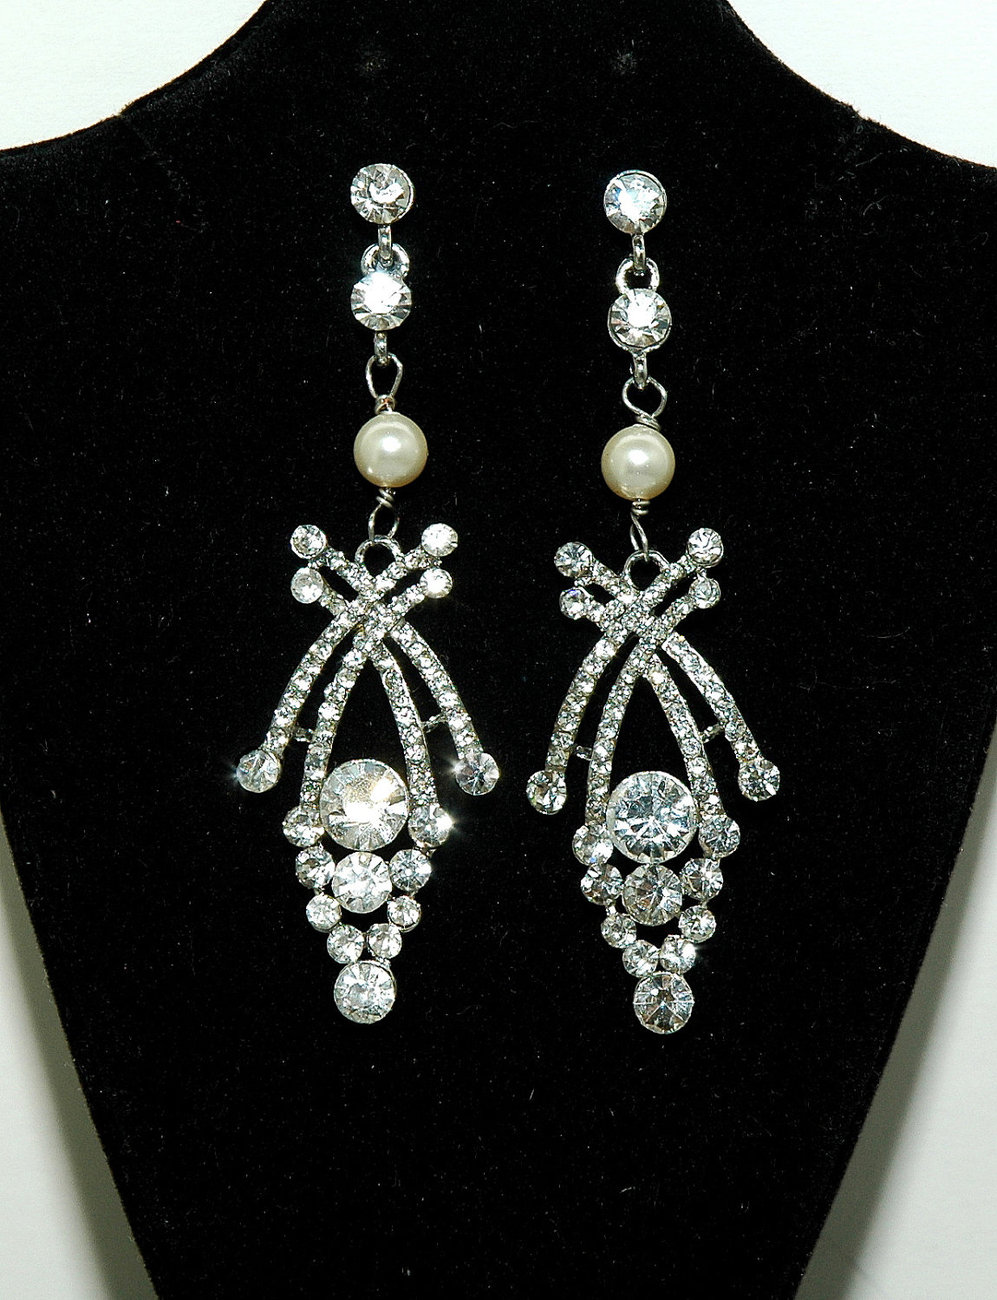 Wedding Bridal Art Deco Crystal Earrings - Bridal Wedding Pearl Earrings - Swarovski Crystal Earrings